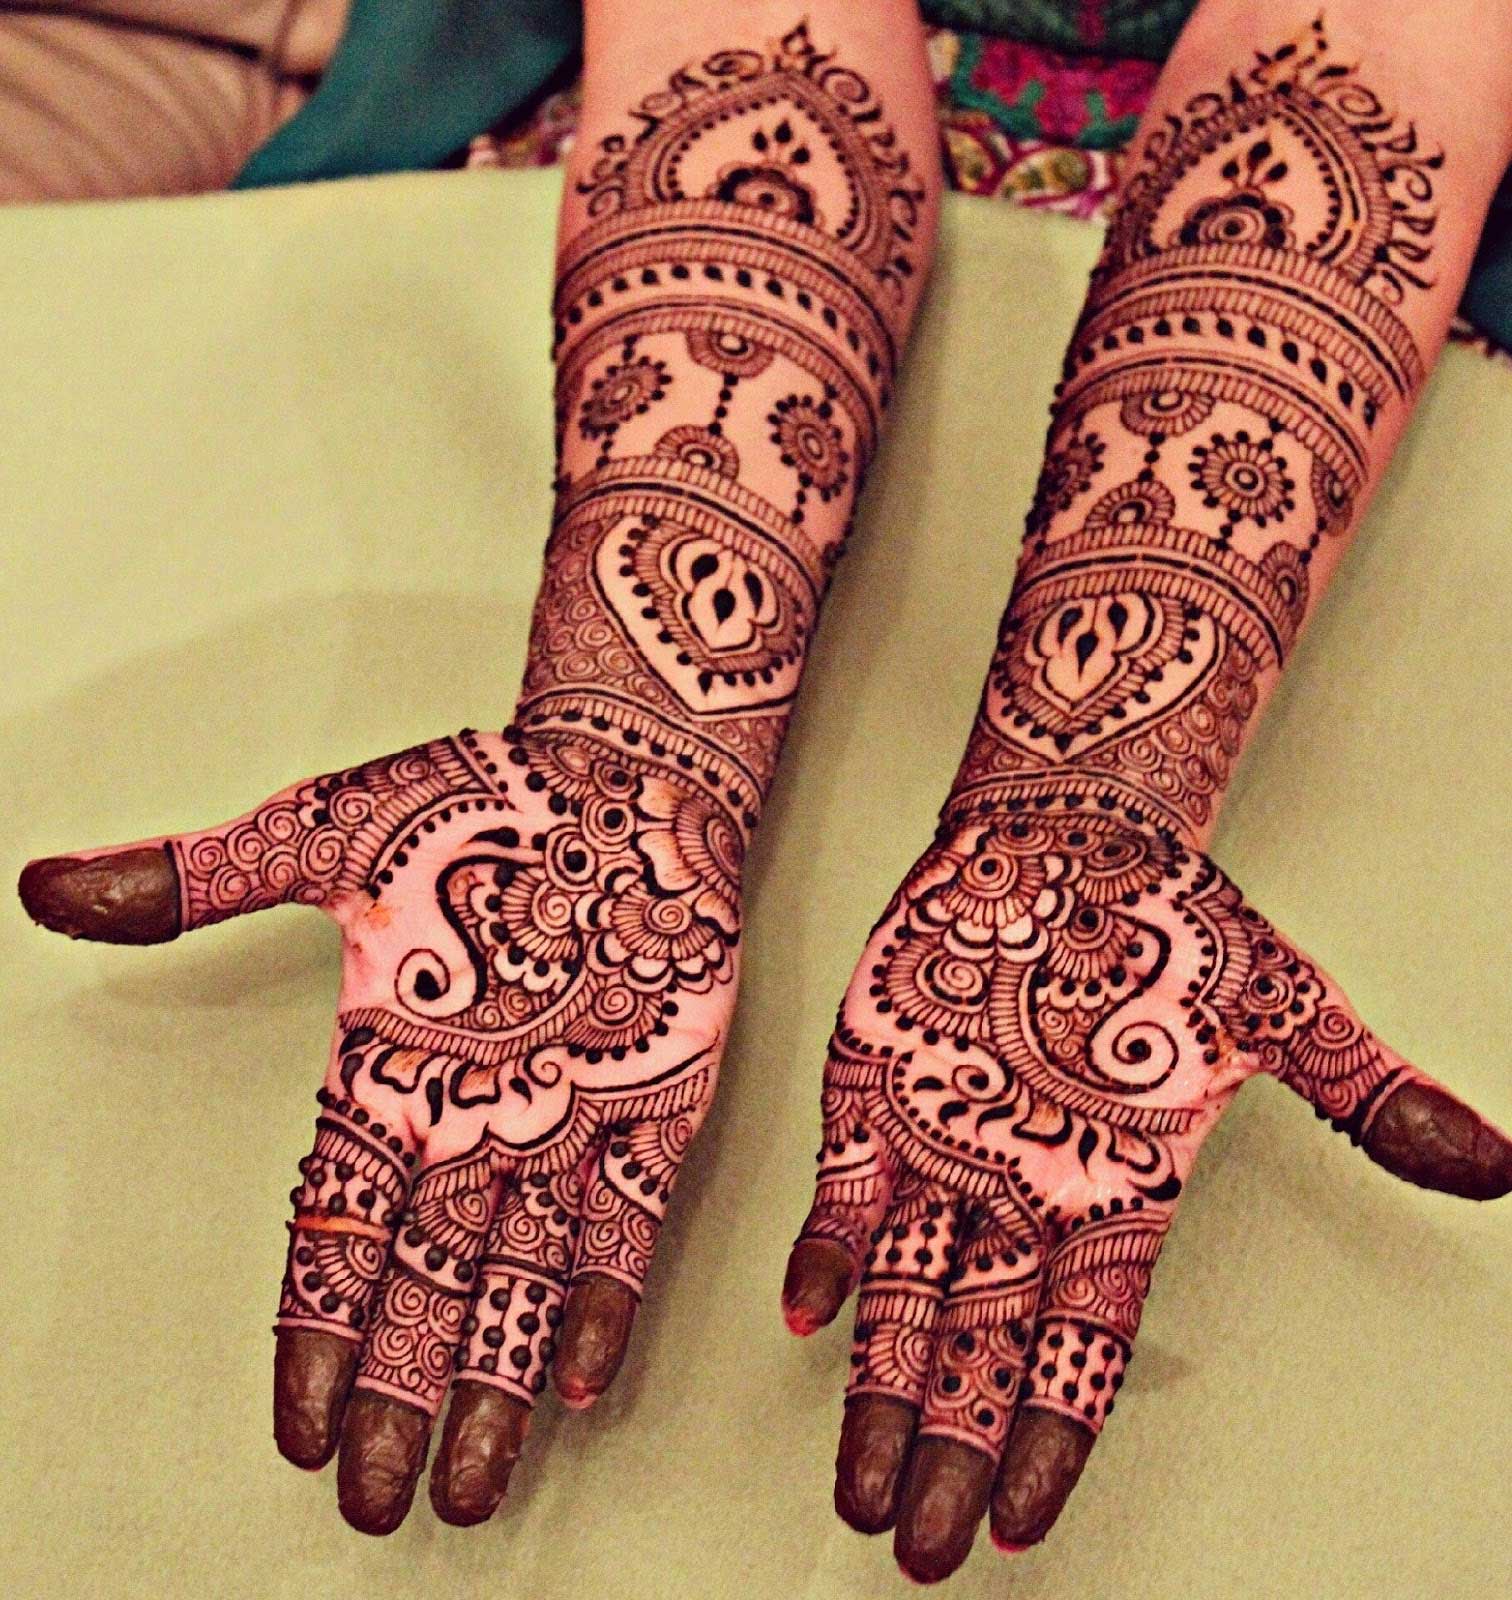 1001 + Ideas for Mehndi - The Gorgeous Indian Henna Tattoo Art